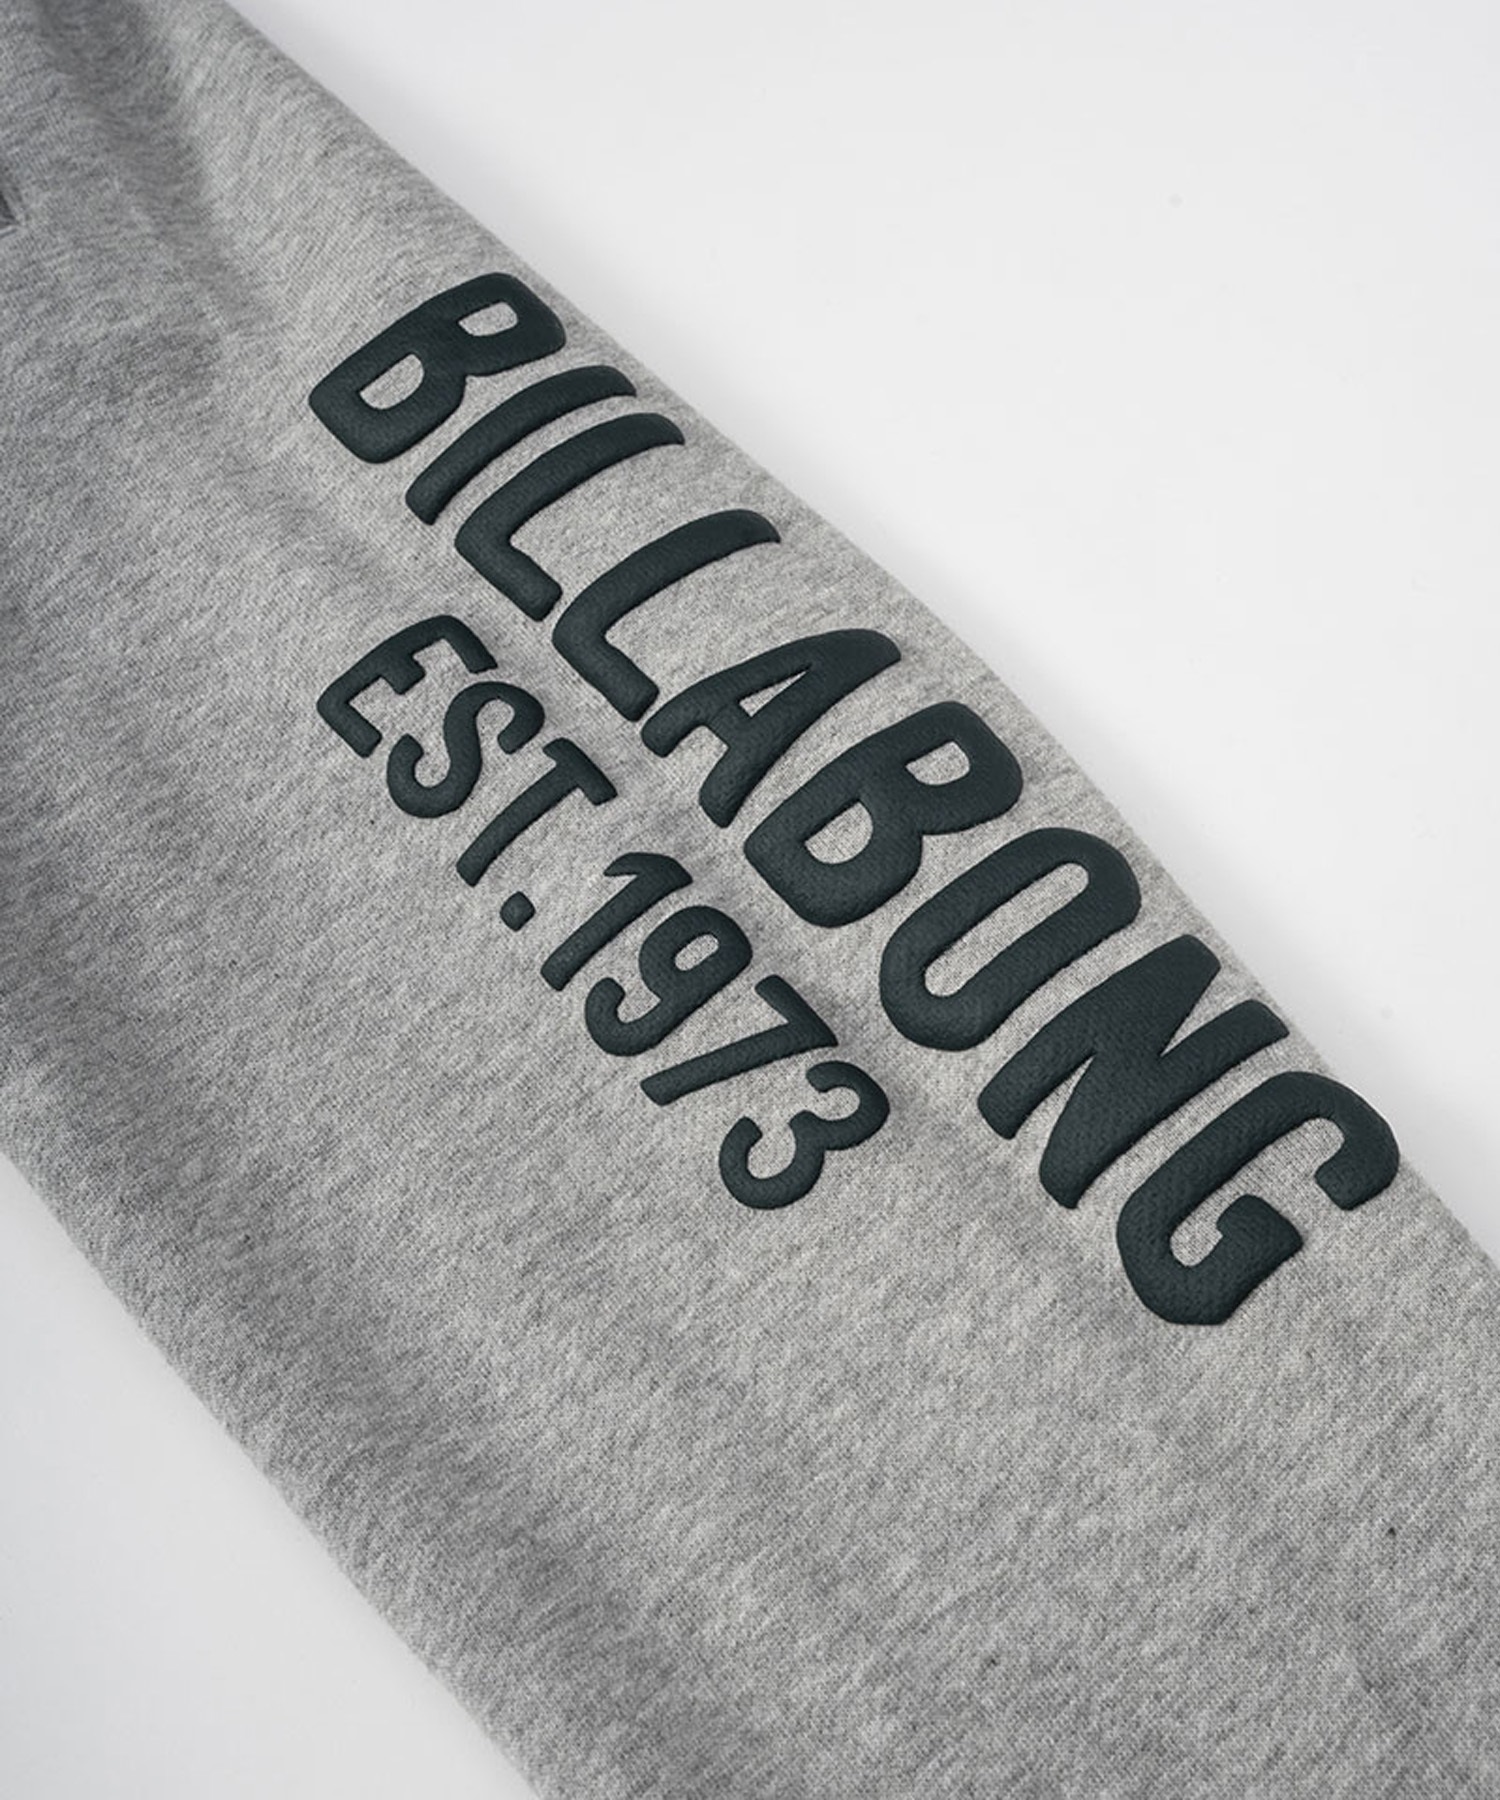 BILLABONG/ビラボン LOGO SET UP スウェットパンツ キッズ ロングパンツ ロンパン 裏起毛 親子コーデ セットアップ対応 BD016-005(BKH-130cm)